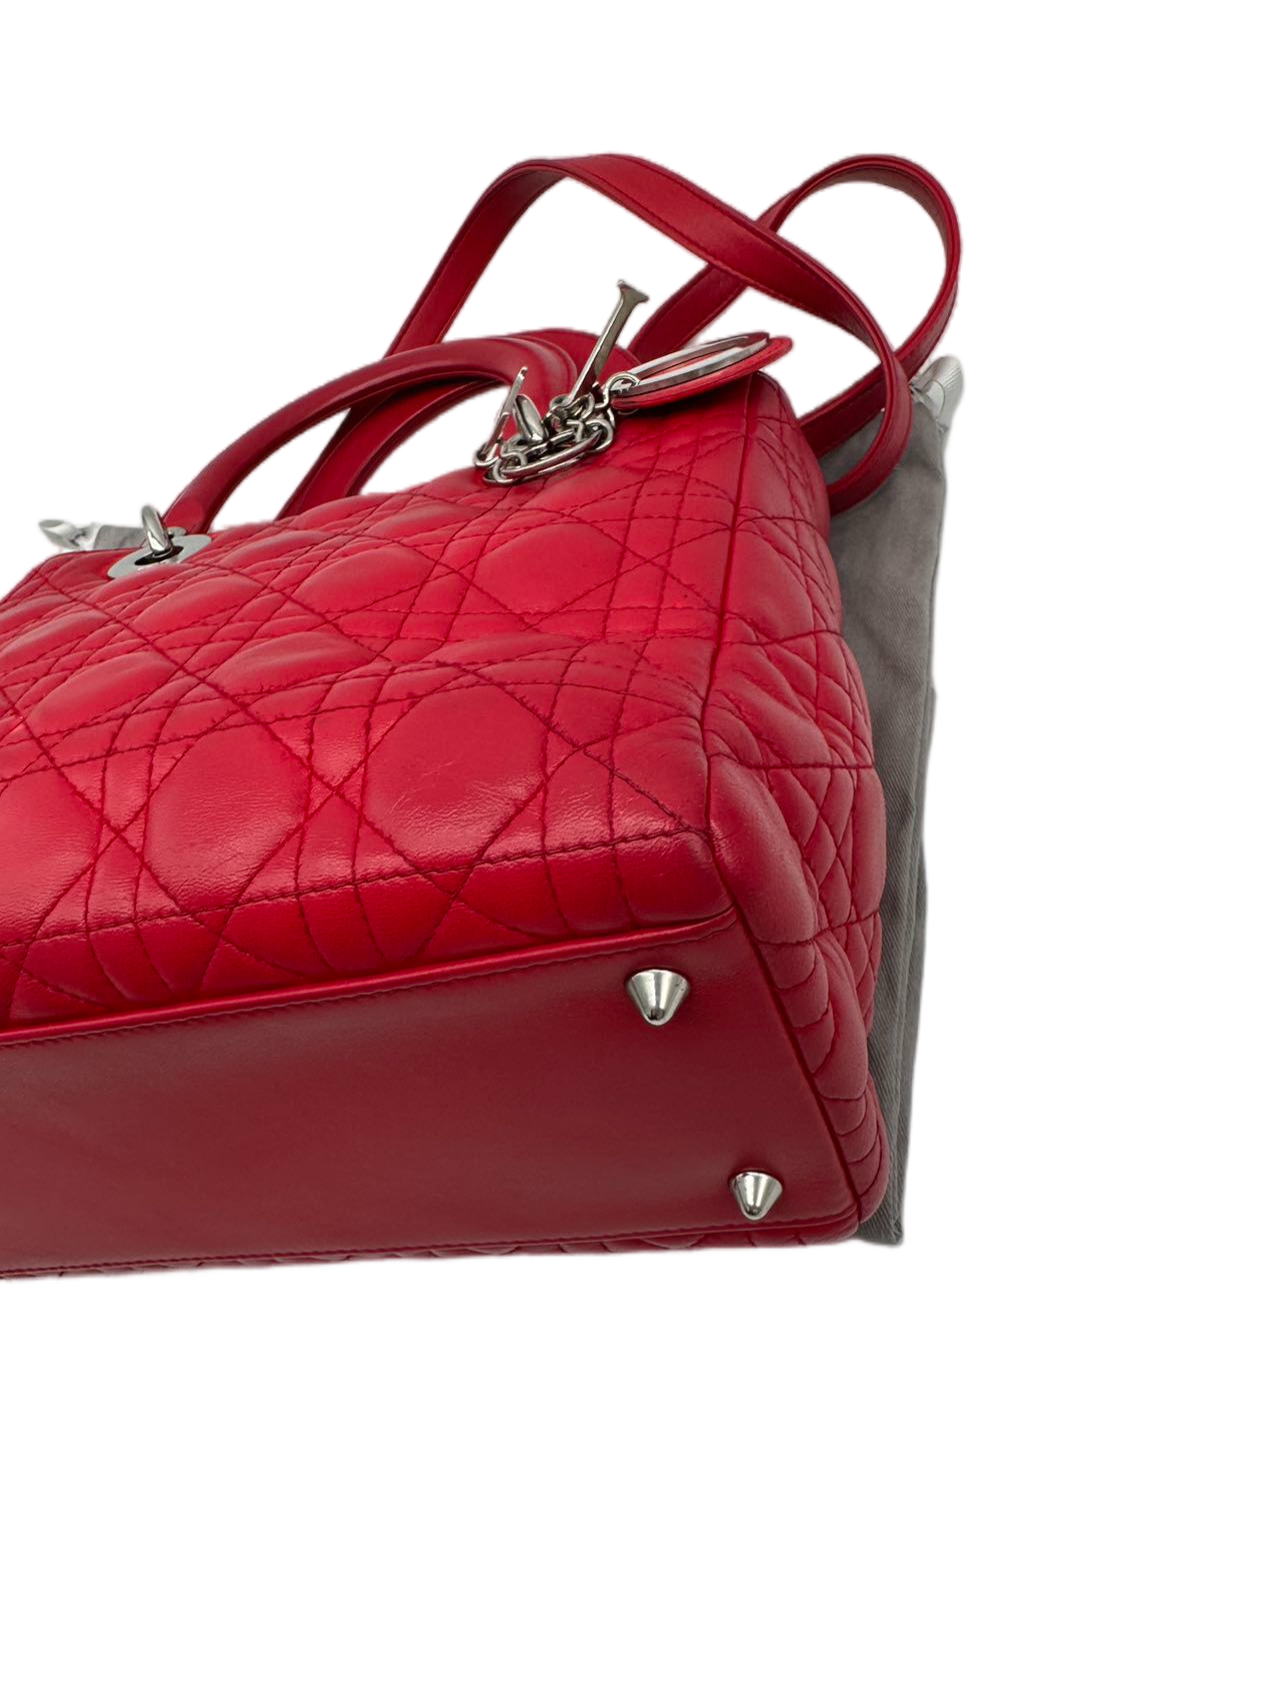 Preloved Christian Dior Lambskin Medium Lady Dior Shoulder Bag